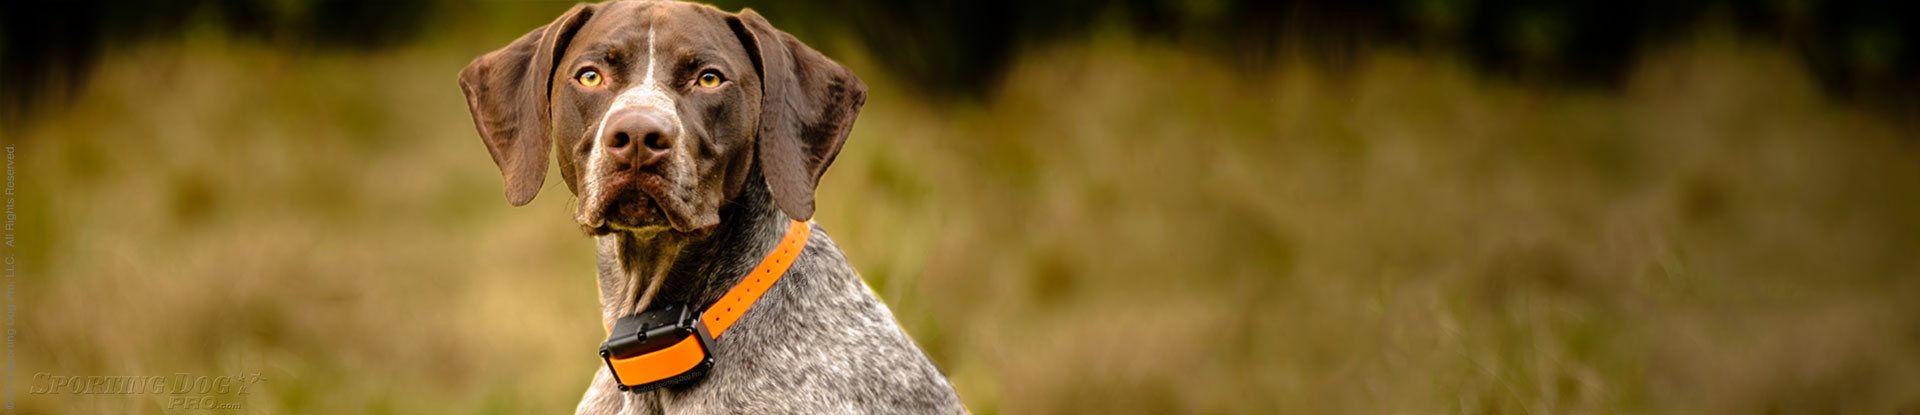 hunting dog wearing a dog training collar